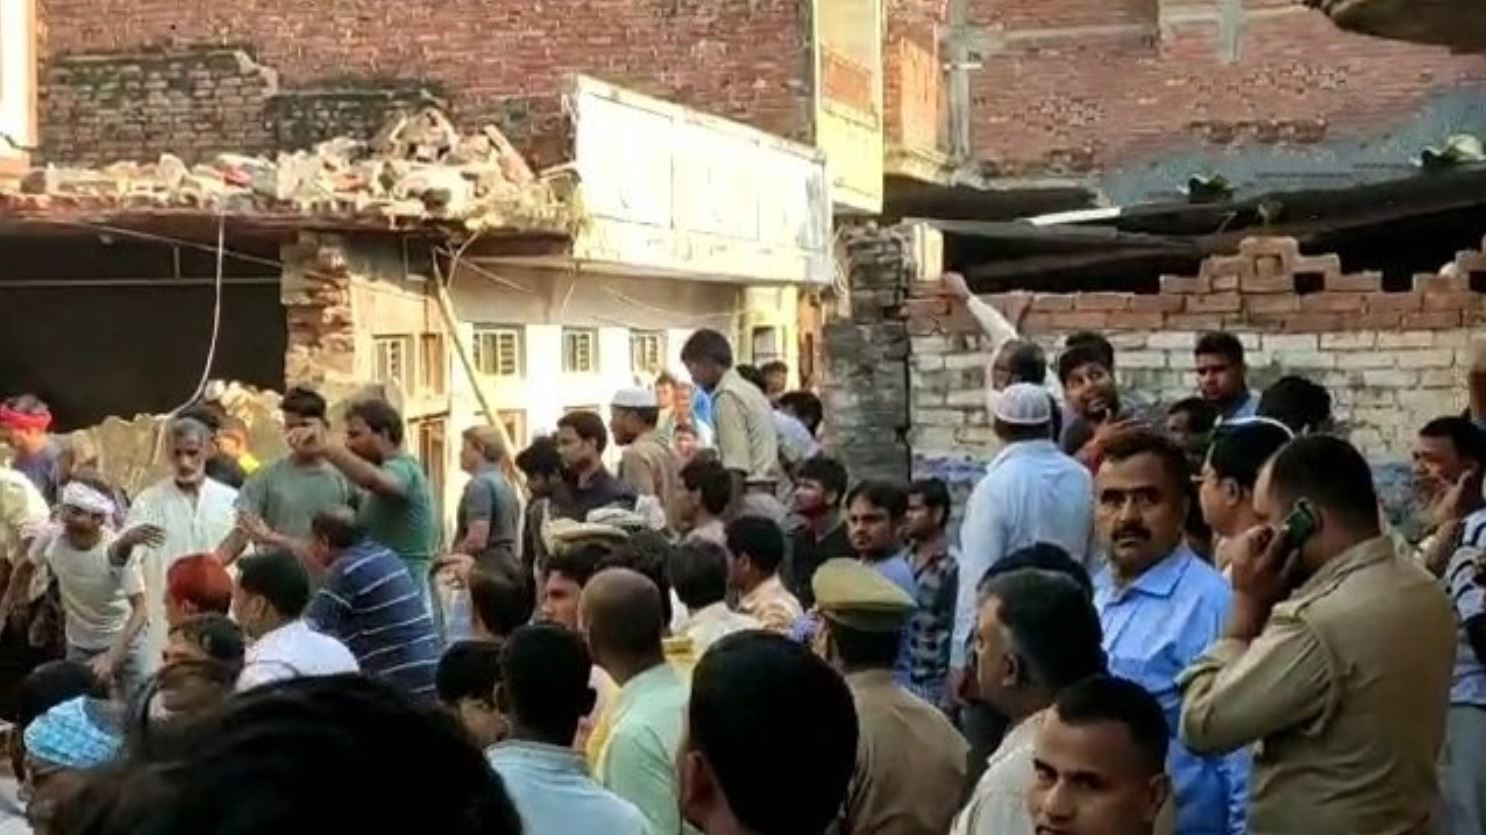 cylinder explosion, Uttar Pradesh, UP, 10 died, Mau district, Awanish Awasthi, UP CM Yogi Adityanath, relief, medical help